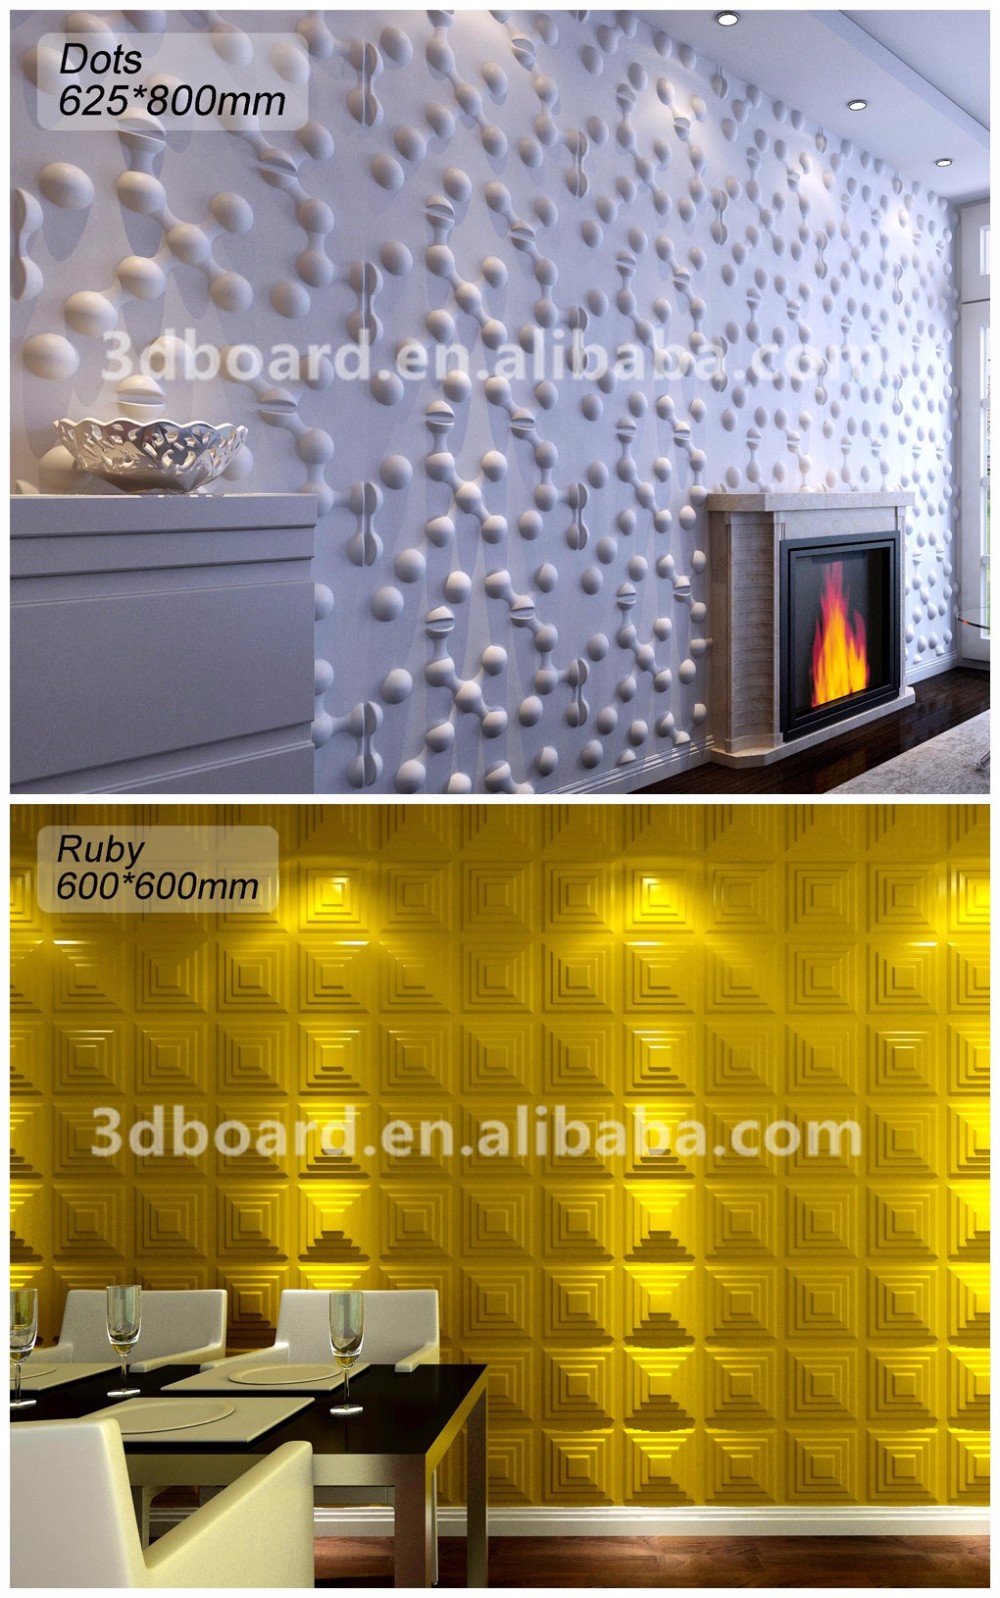 Wallpaper Wall Designs Texture 3d Image Num 88